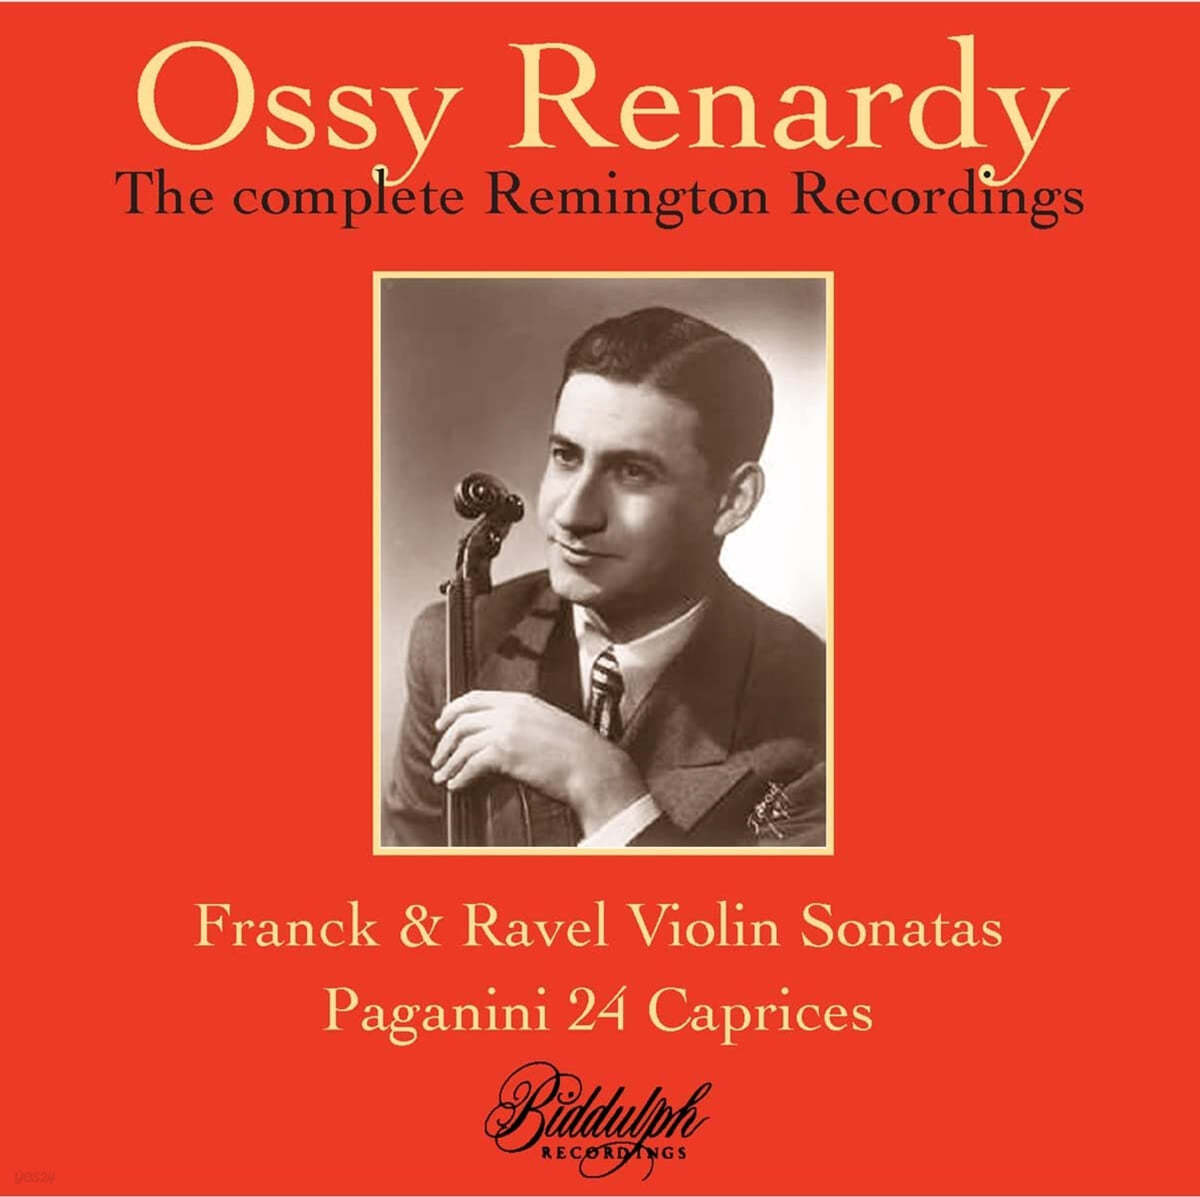 Ossy Renardy 파가니니: 카프리스 전곡 / 프랑크 / 라벨: 바이올린 소나타 - 오시 레나디 (The Complete Remington Recordings)